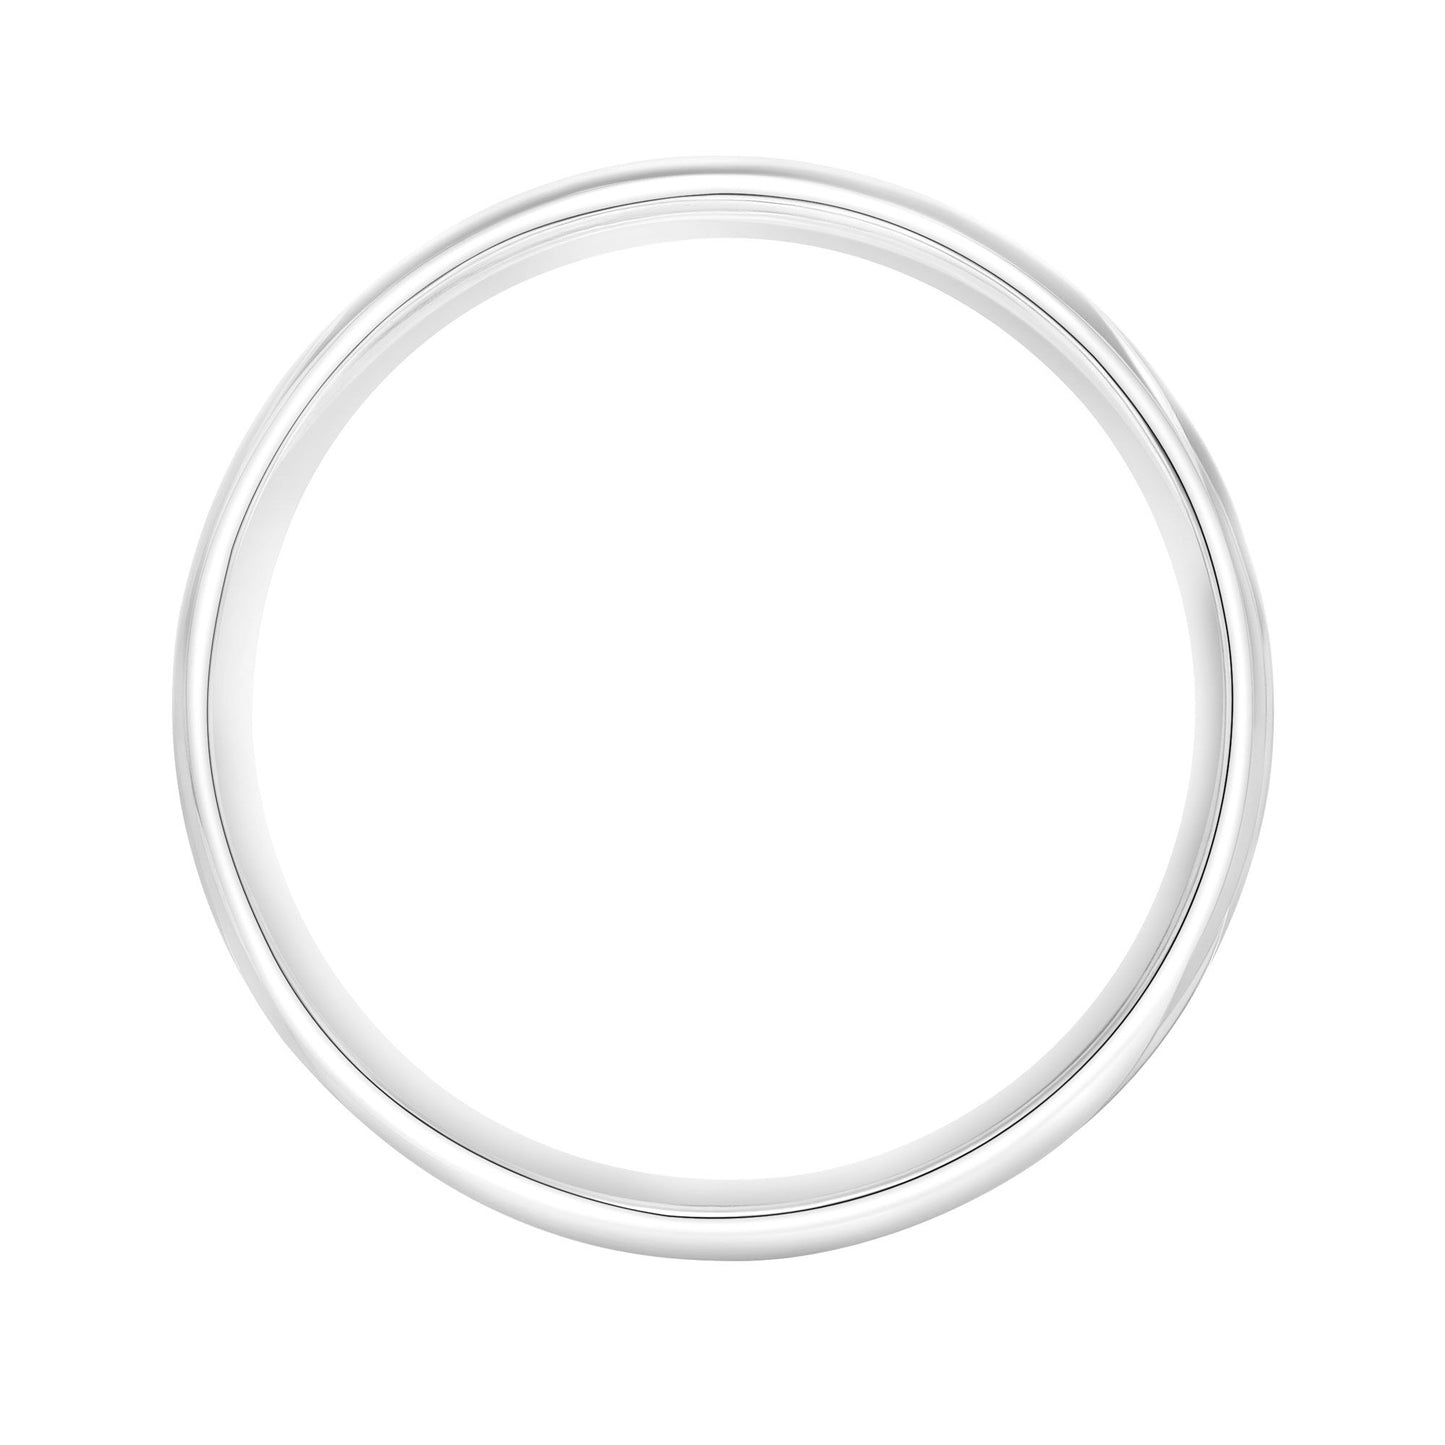 Roux 5mm Light Low Dome Platinum Wedding Ring